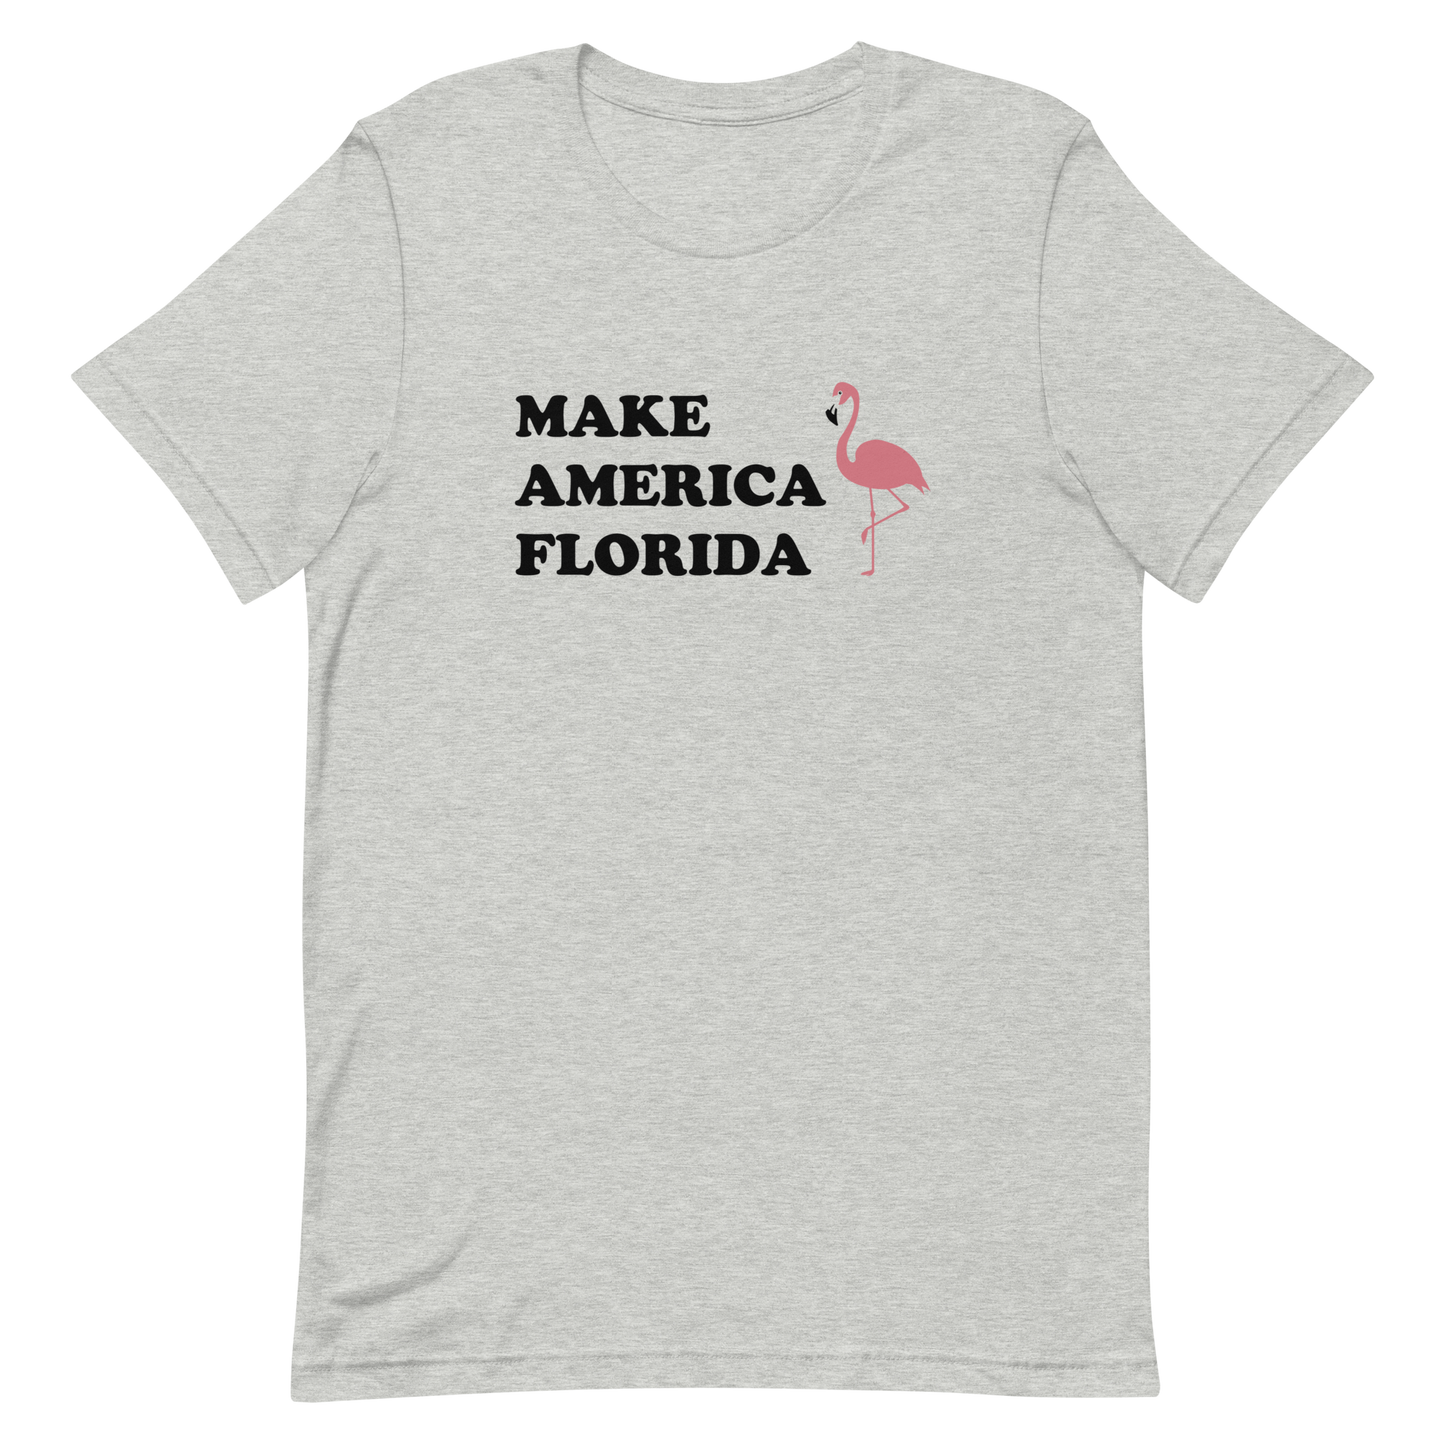 Make America Florida T-shirt